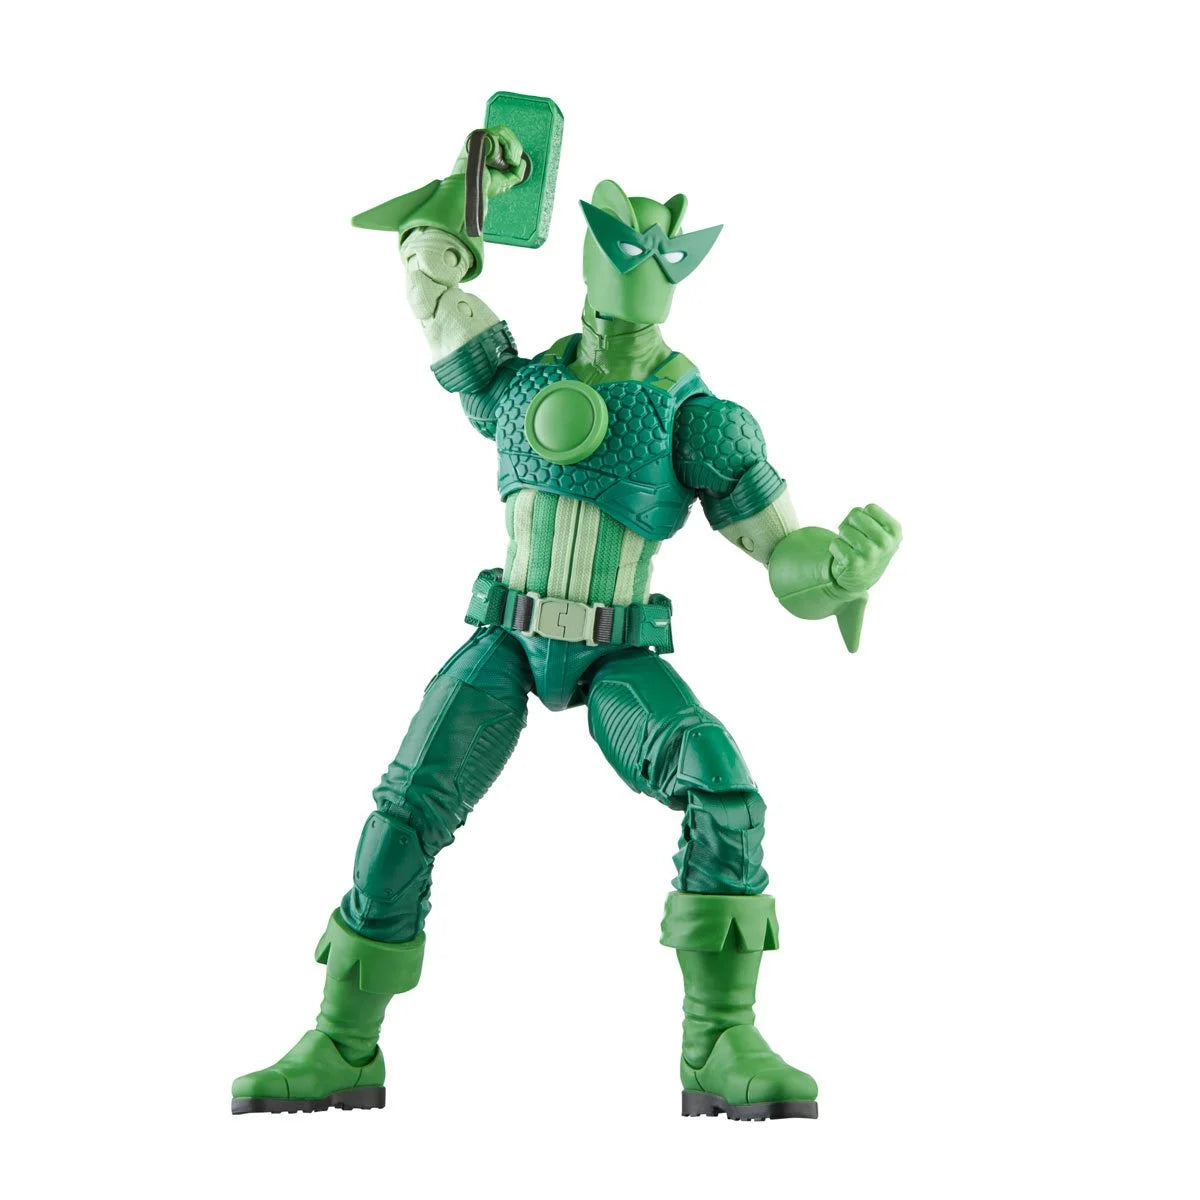 Super-Adaptoid with hammer pose - Heretoserveyou